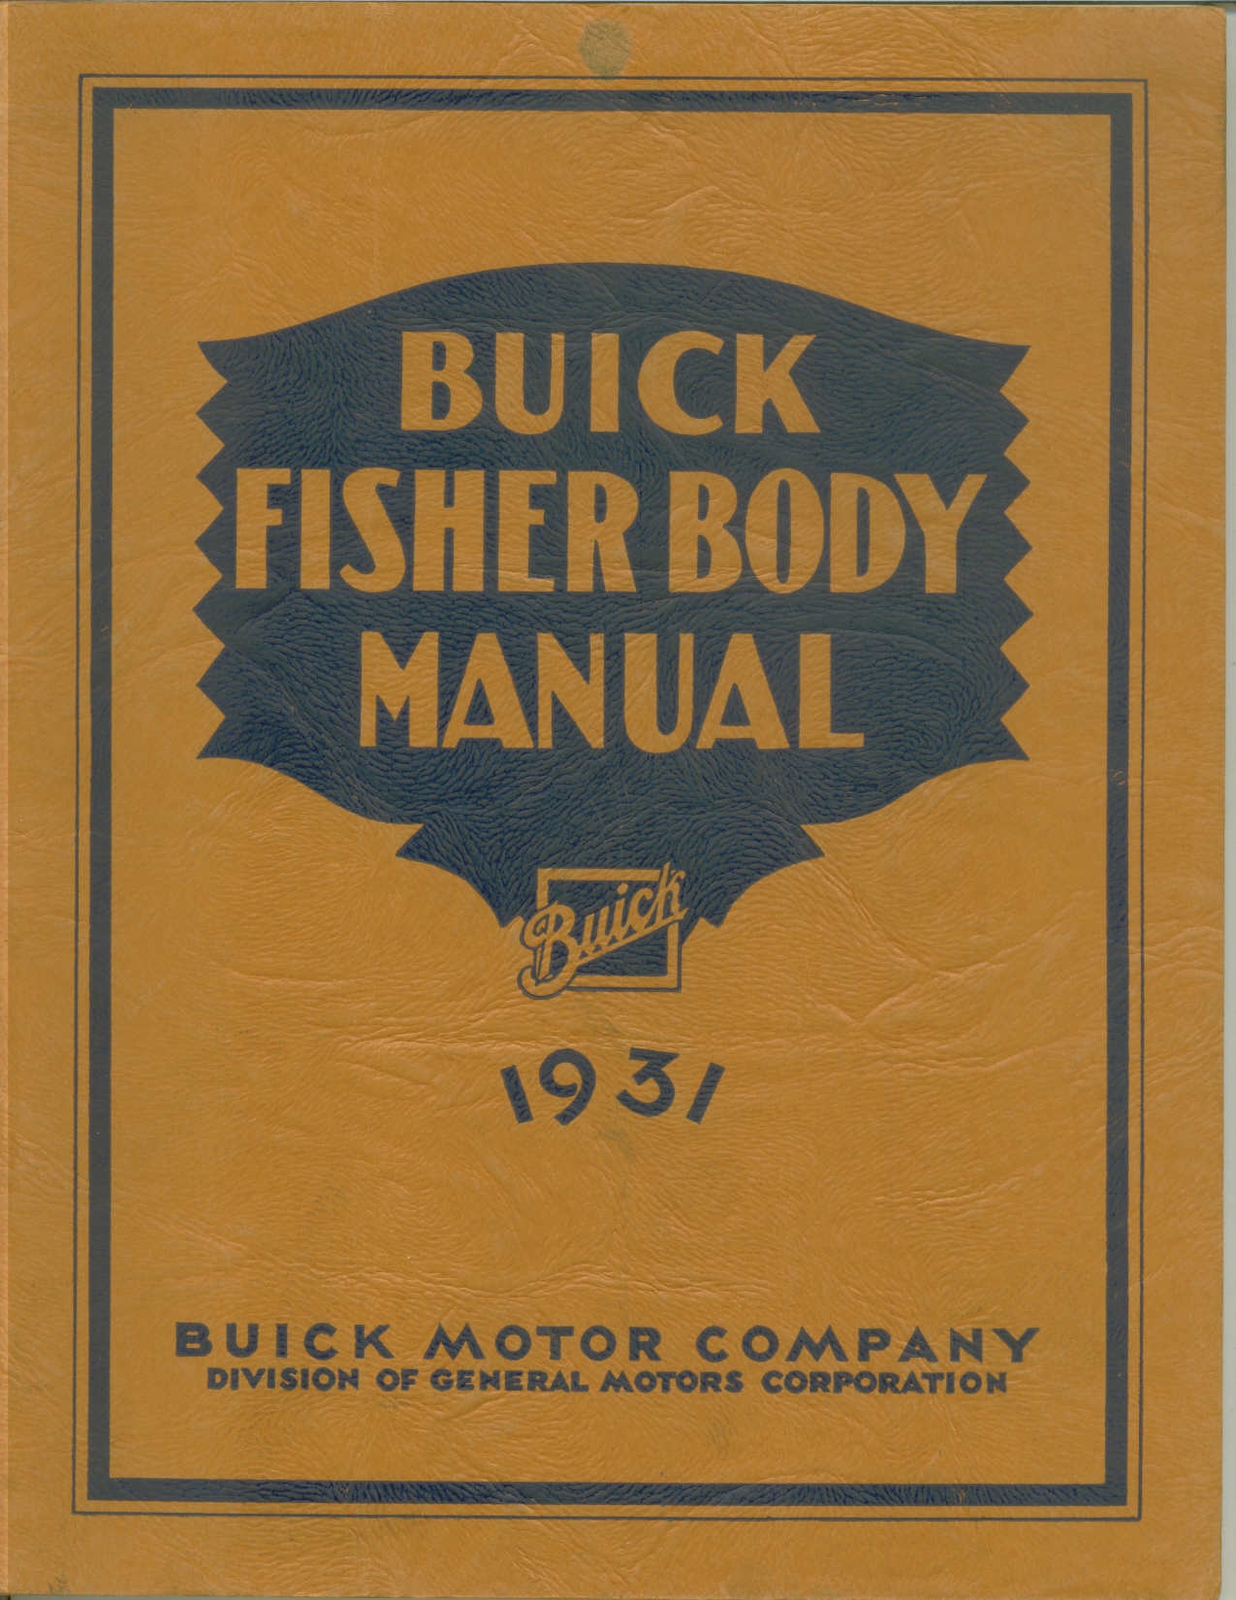 n_1931 Buick Fisher Body Manual-01.jpg